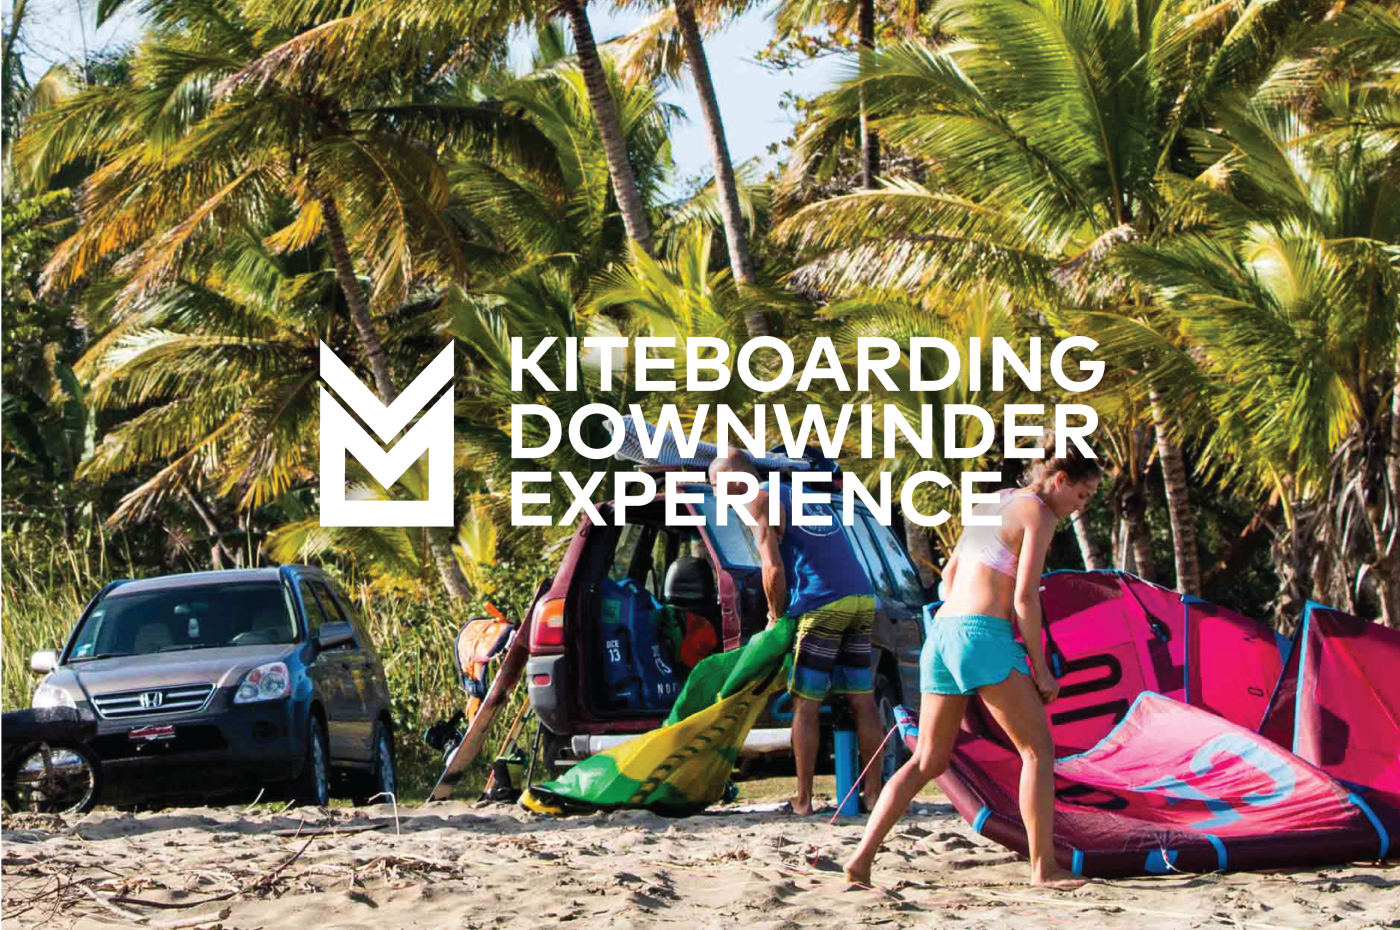 kiteboarding downwinder trips in cabarete Dominican Republic